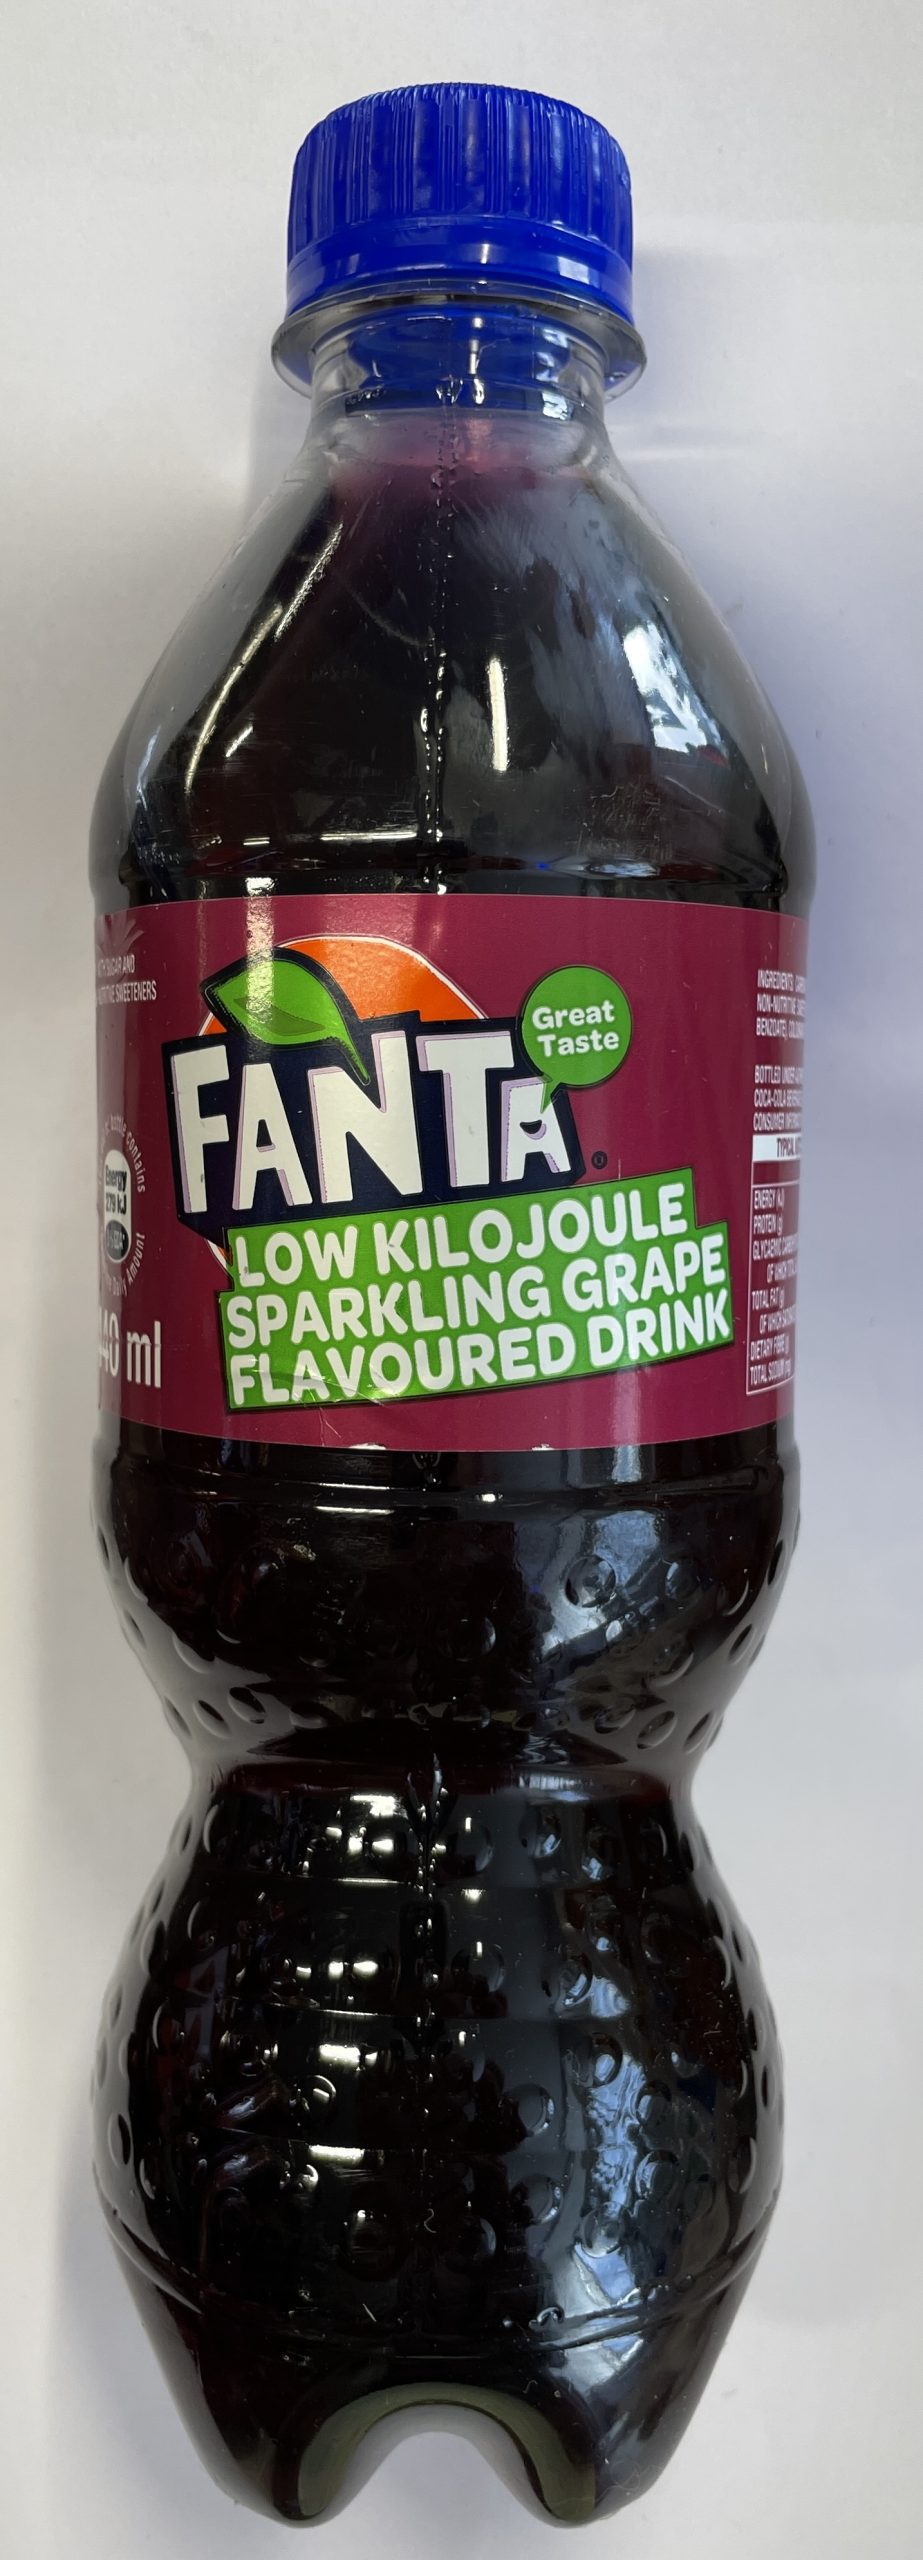 https://thesashopireland.com/wp-content/uploads/2021/02/Fanta-Grape-440ml-bottle-scaled.jpg